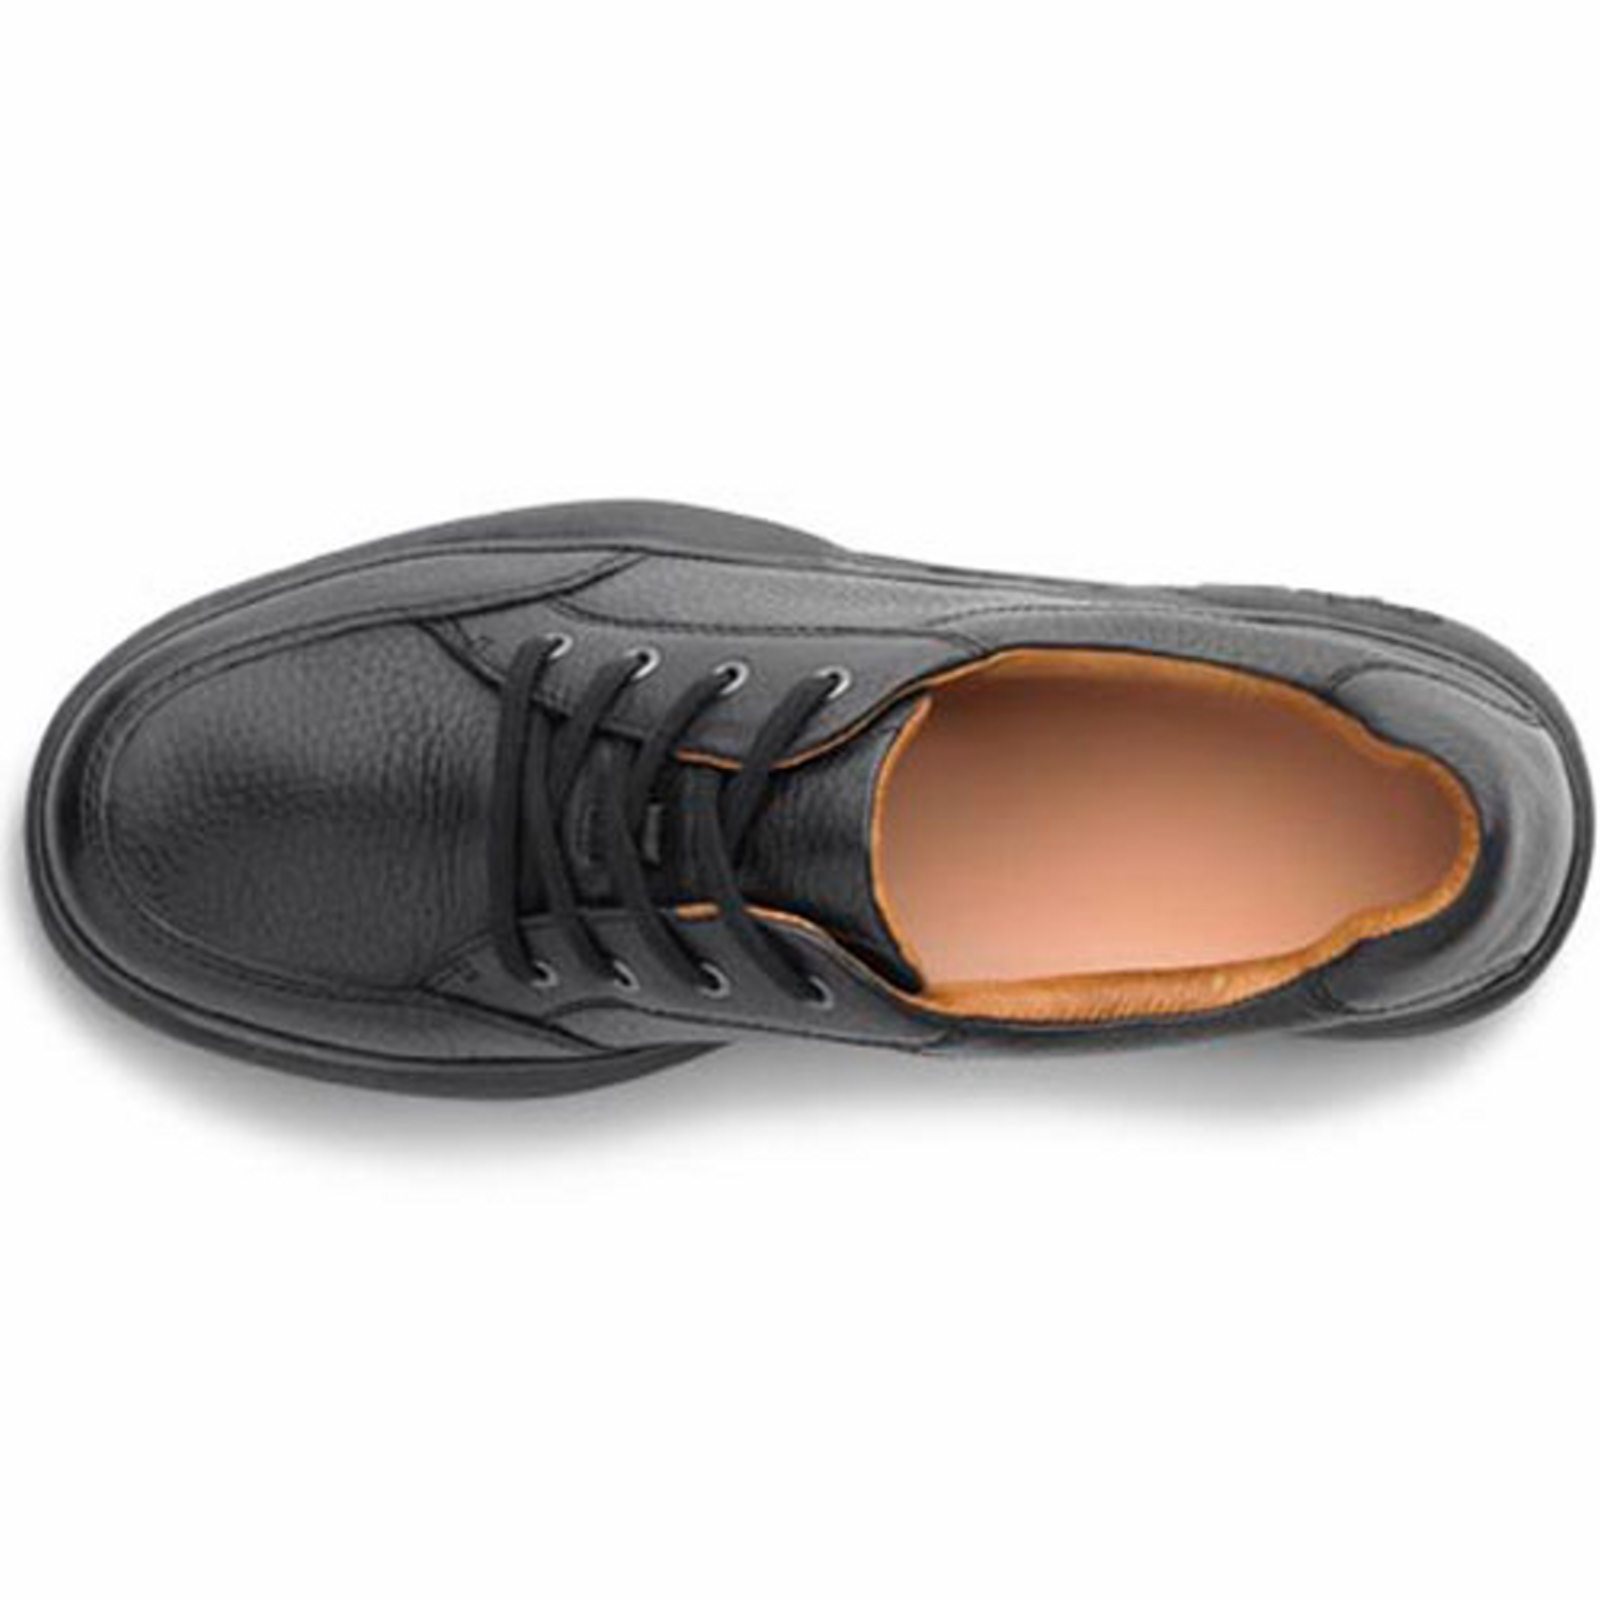 Dr. Comfort Justin Men's Casual Shoe: 8.5 Medium (B/D) Black Lace - image 5 of 5